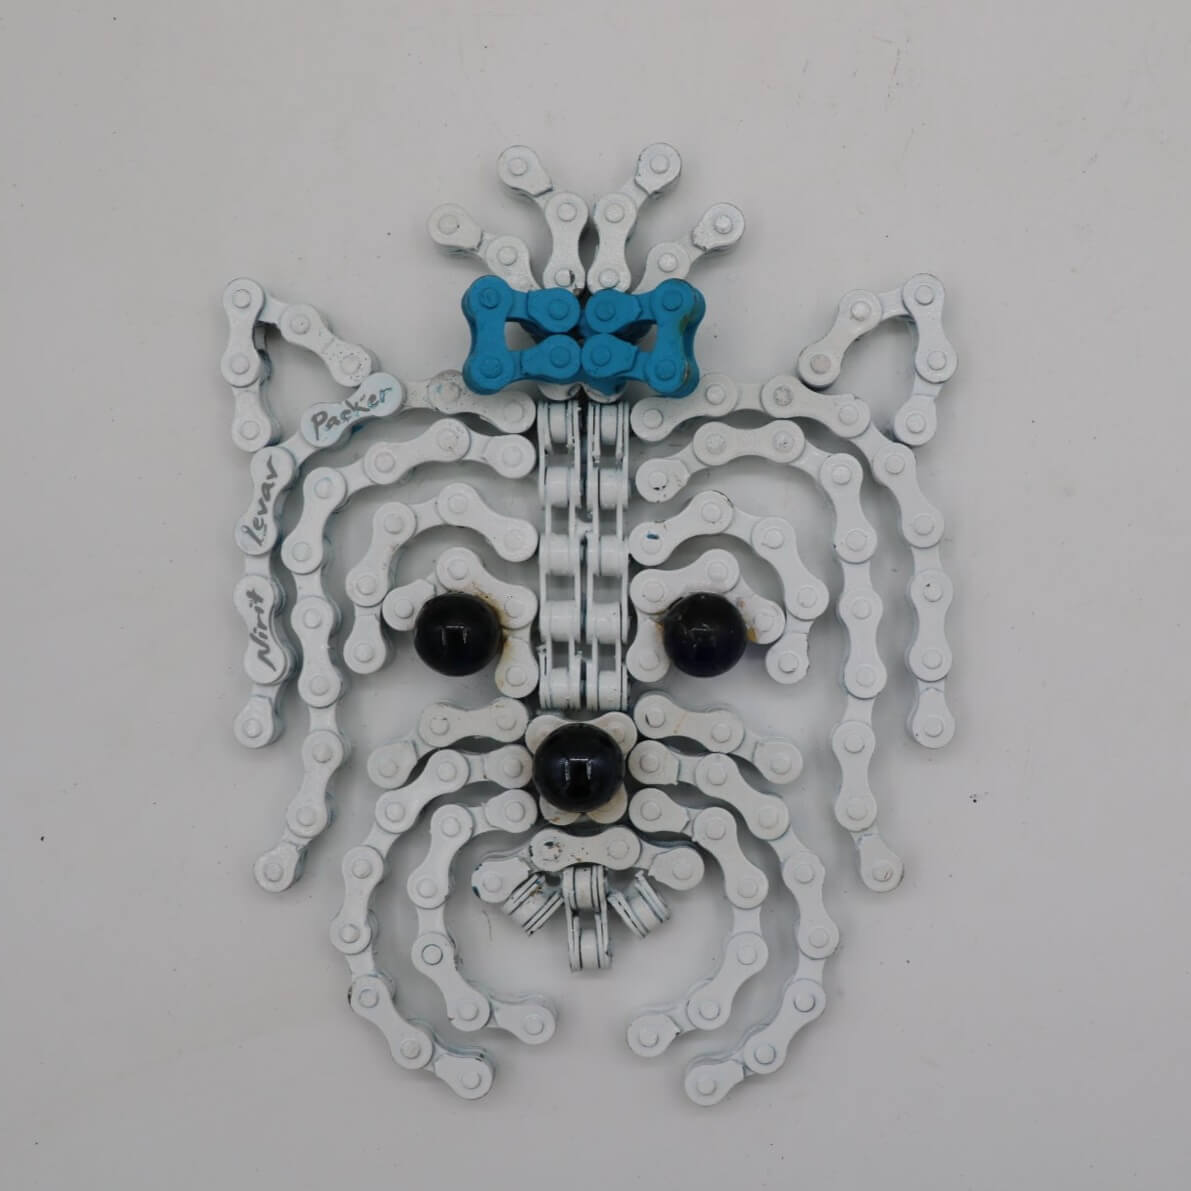 Yorkie dog wall art sculpture (baby choo)